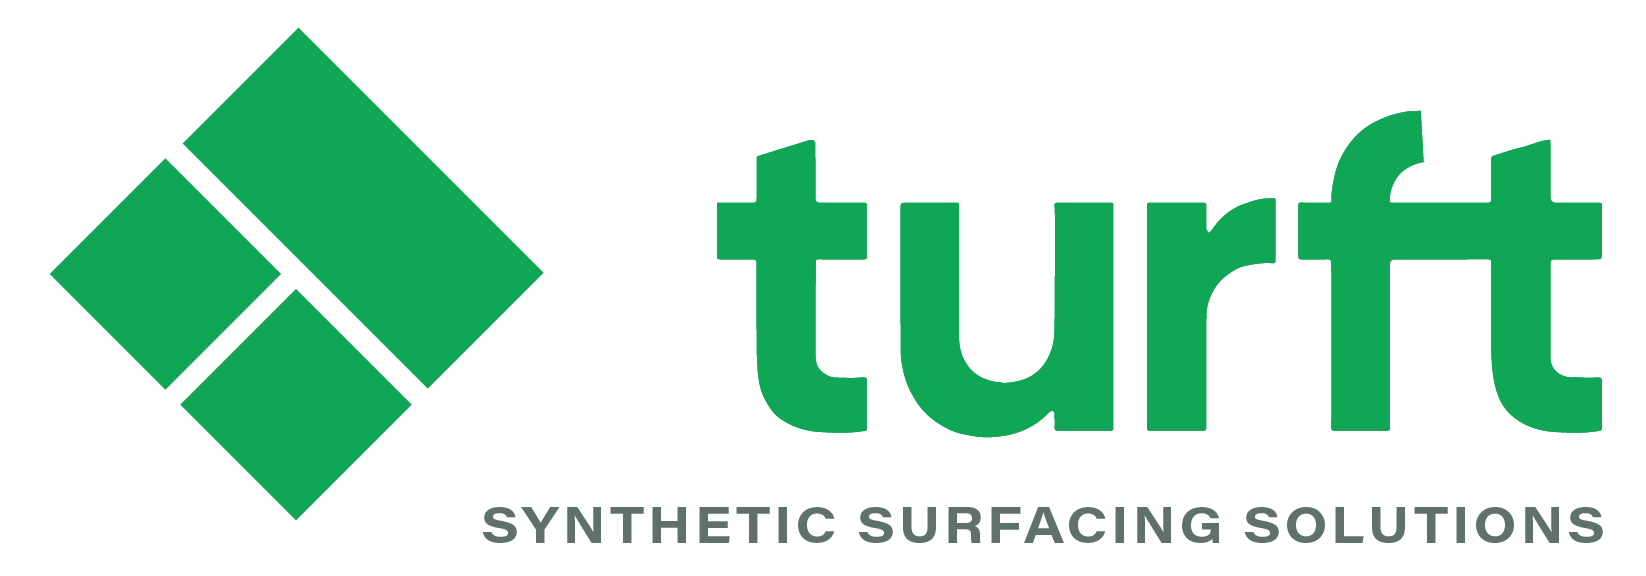 turft logo